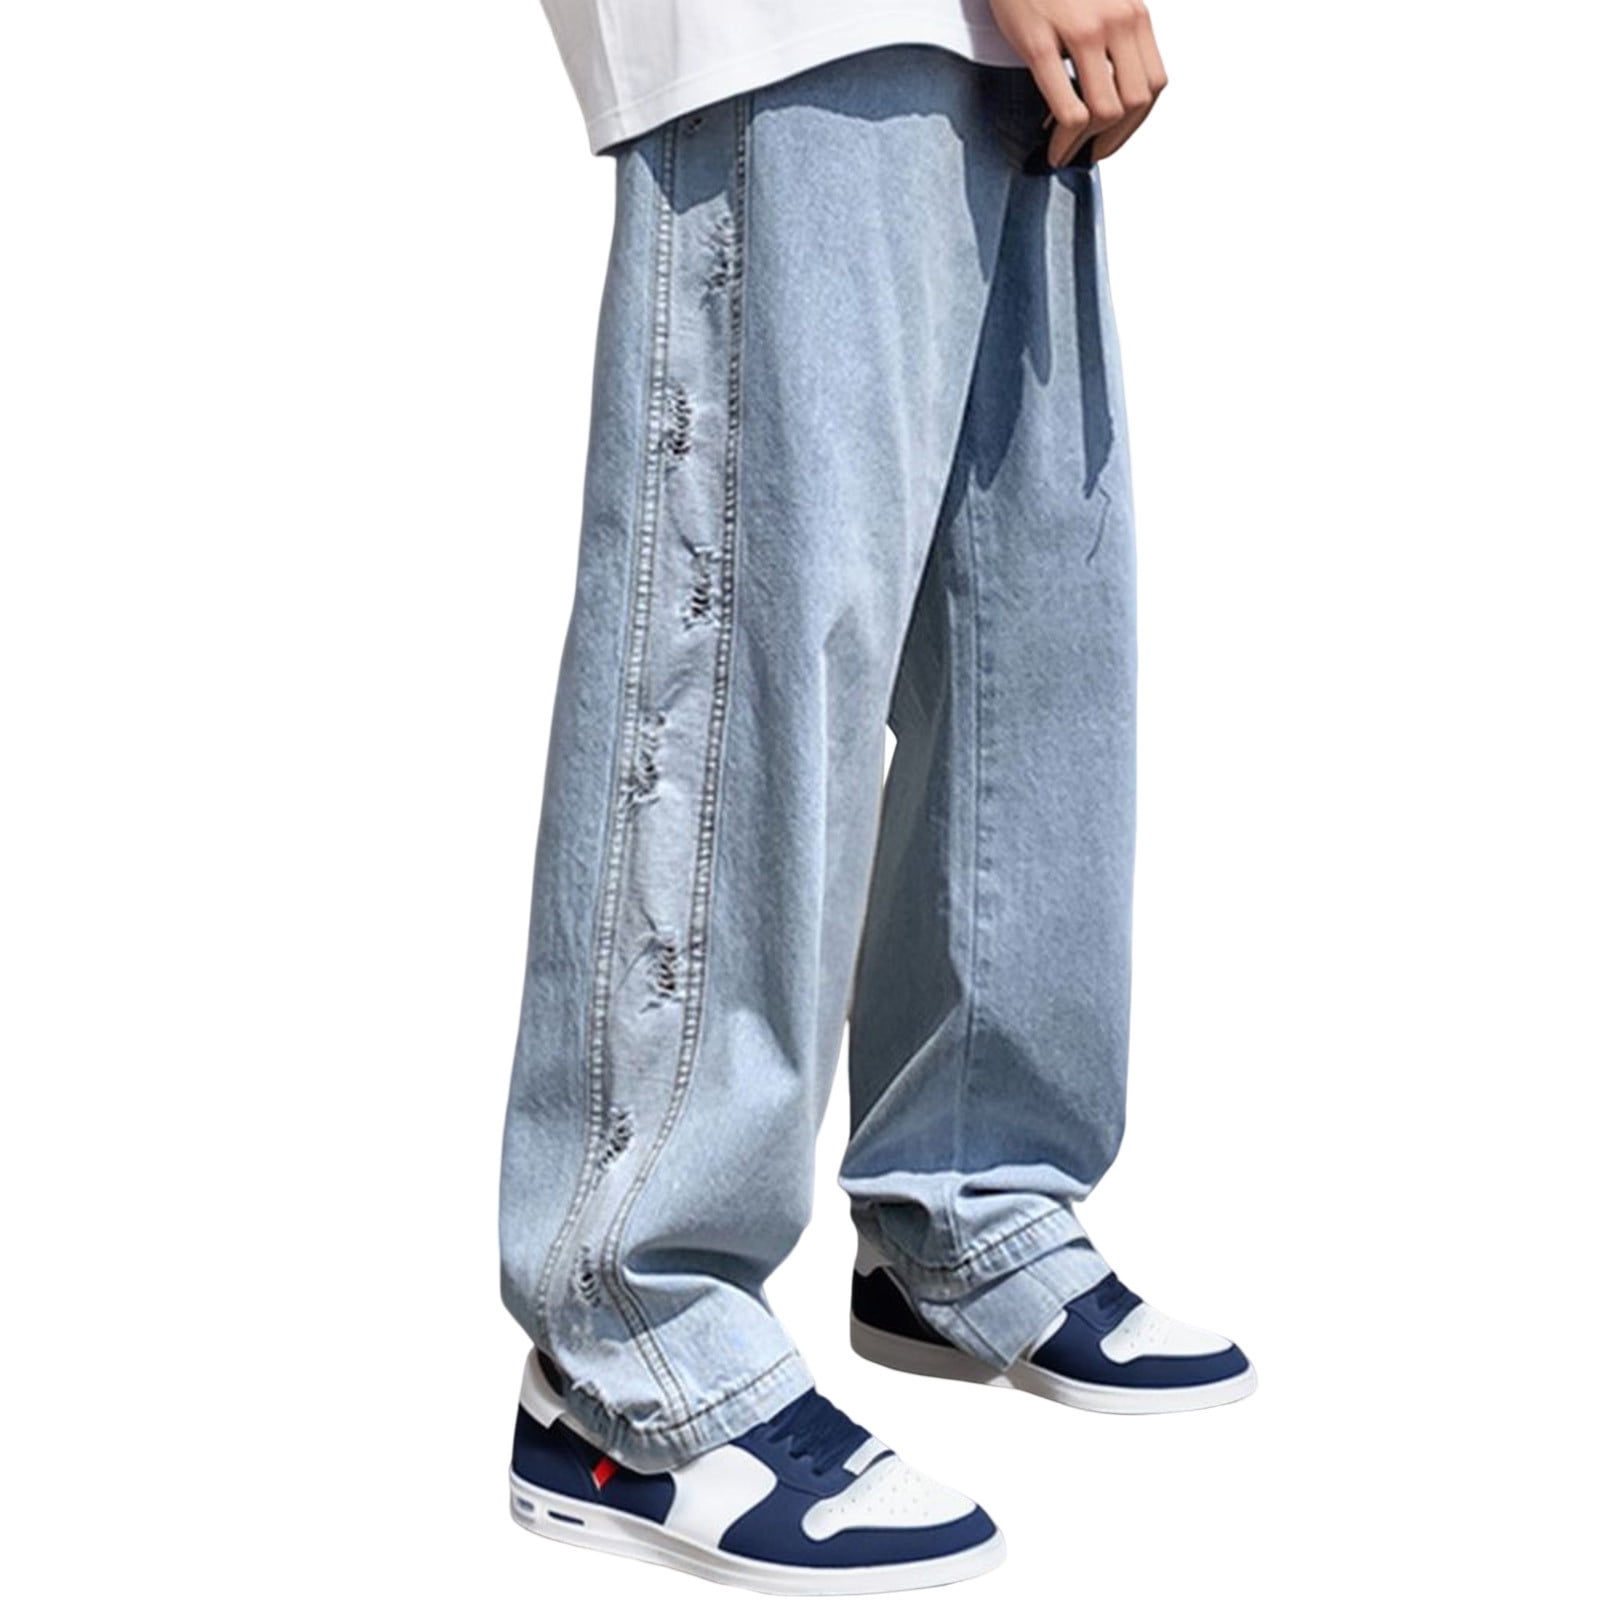 adviicd Big And Tall Jeans for Men Men's Slim Fit Skinny Comfy Denim ...